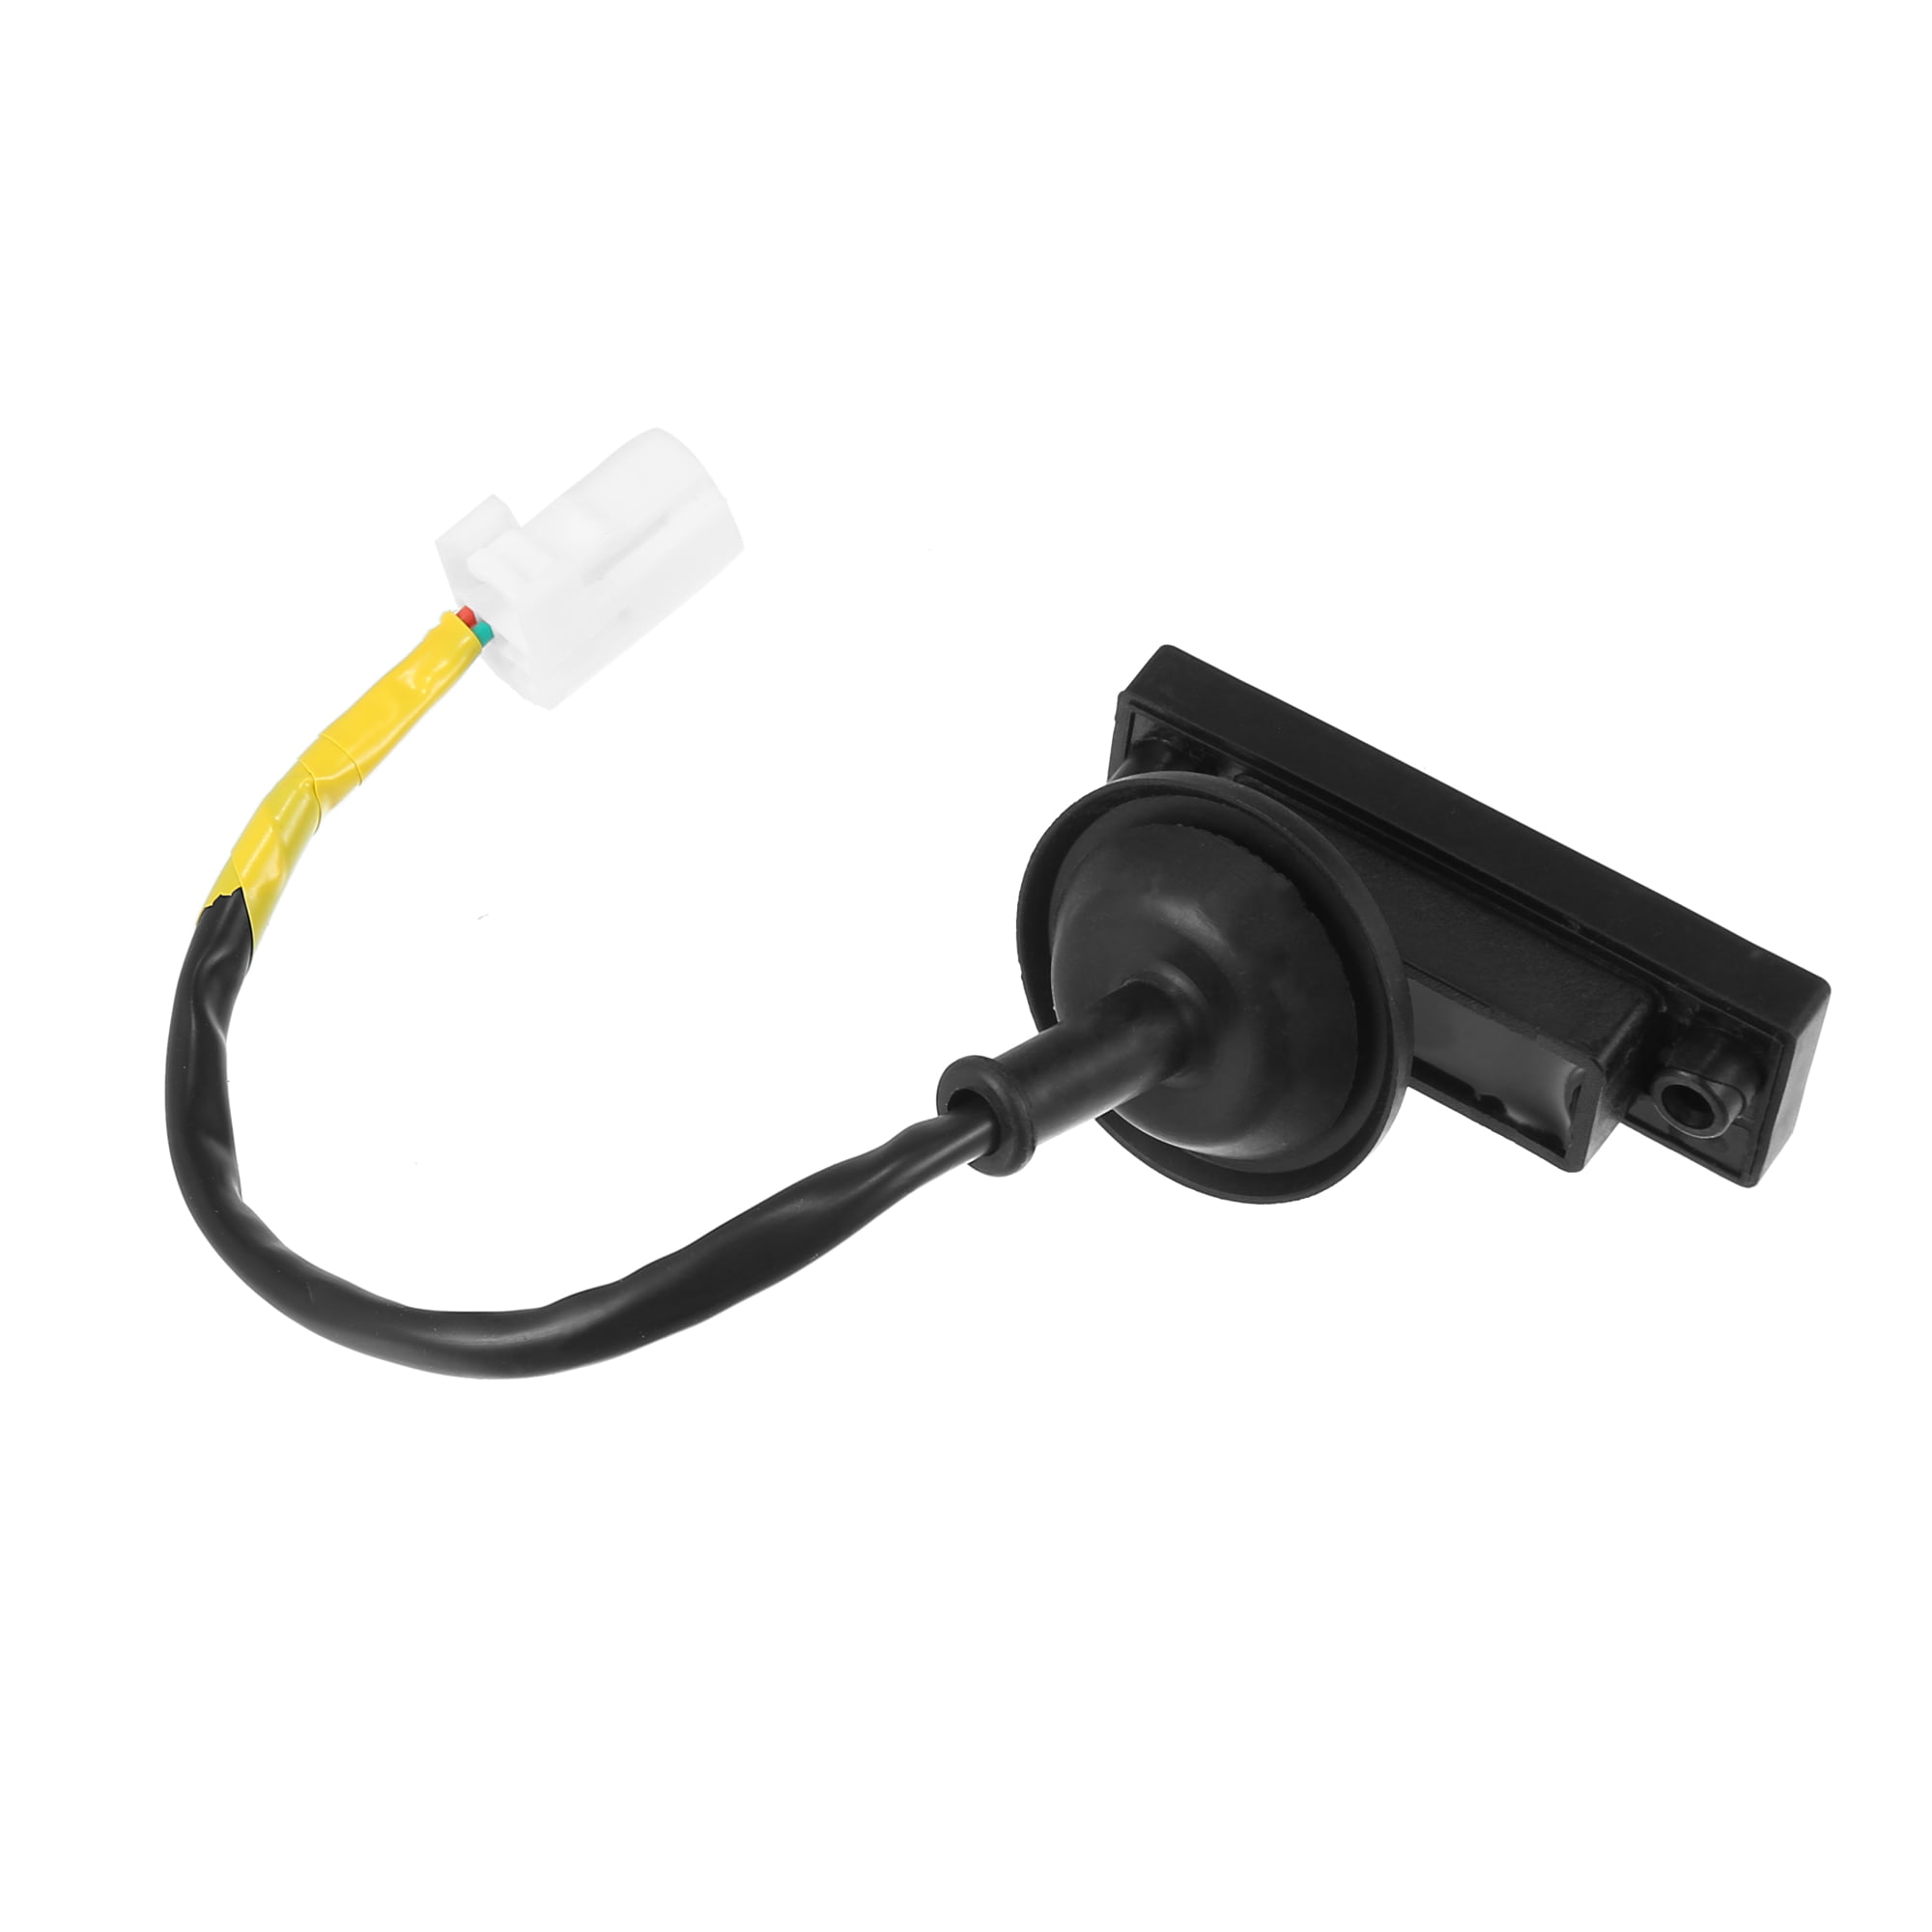 FOR KIA RIO Car Release Switch Boot Button Tailgate Switch Handle 81260- 1W220 EUR 11,71 - PicClick IT